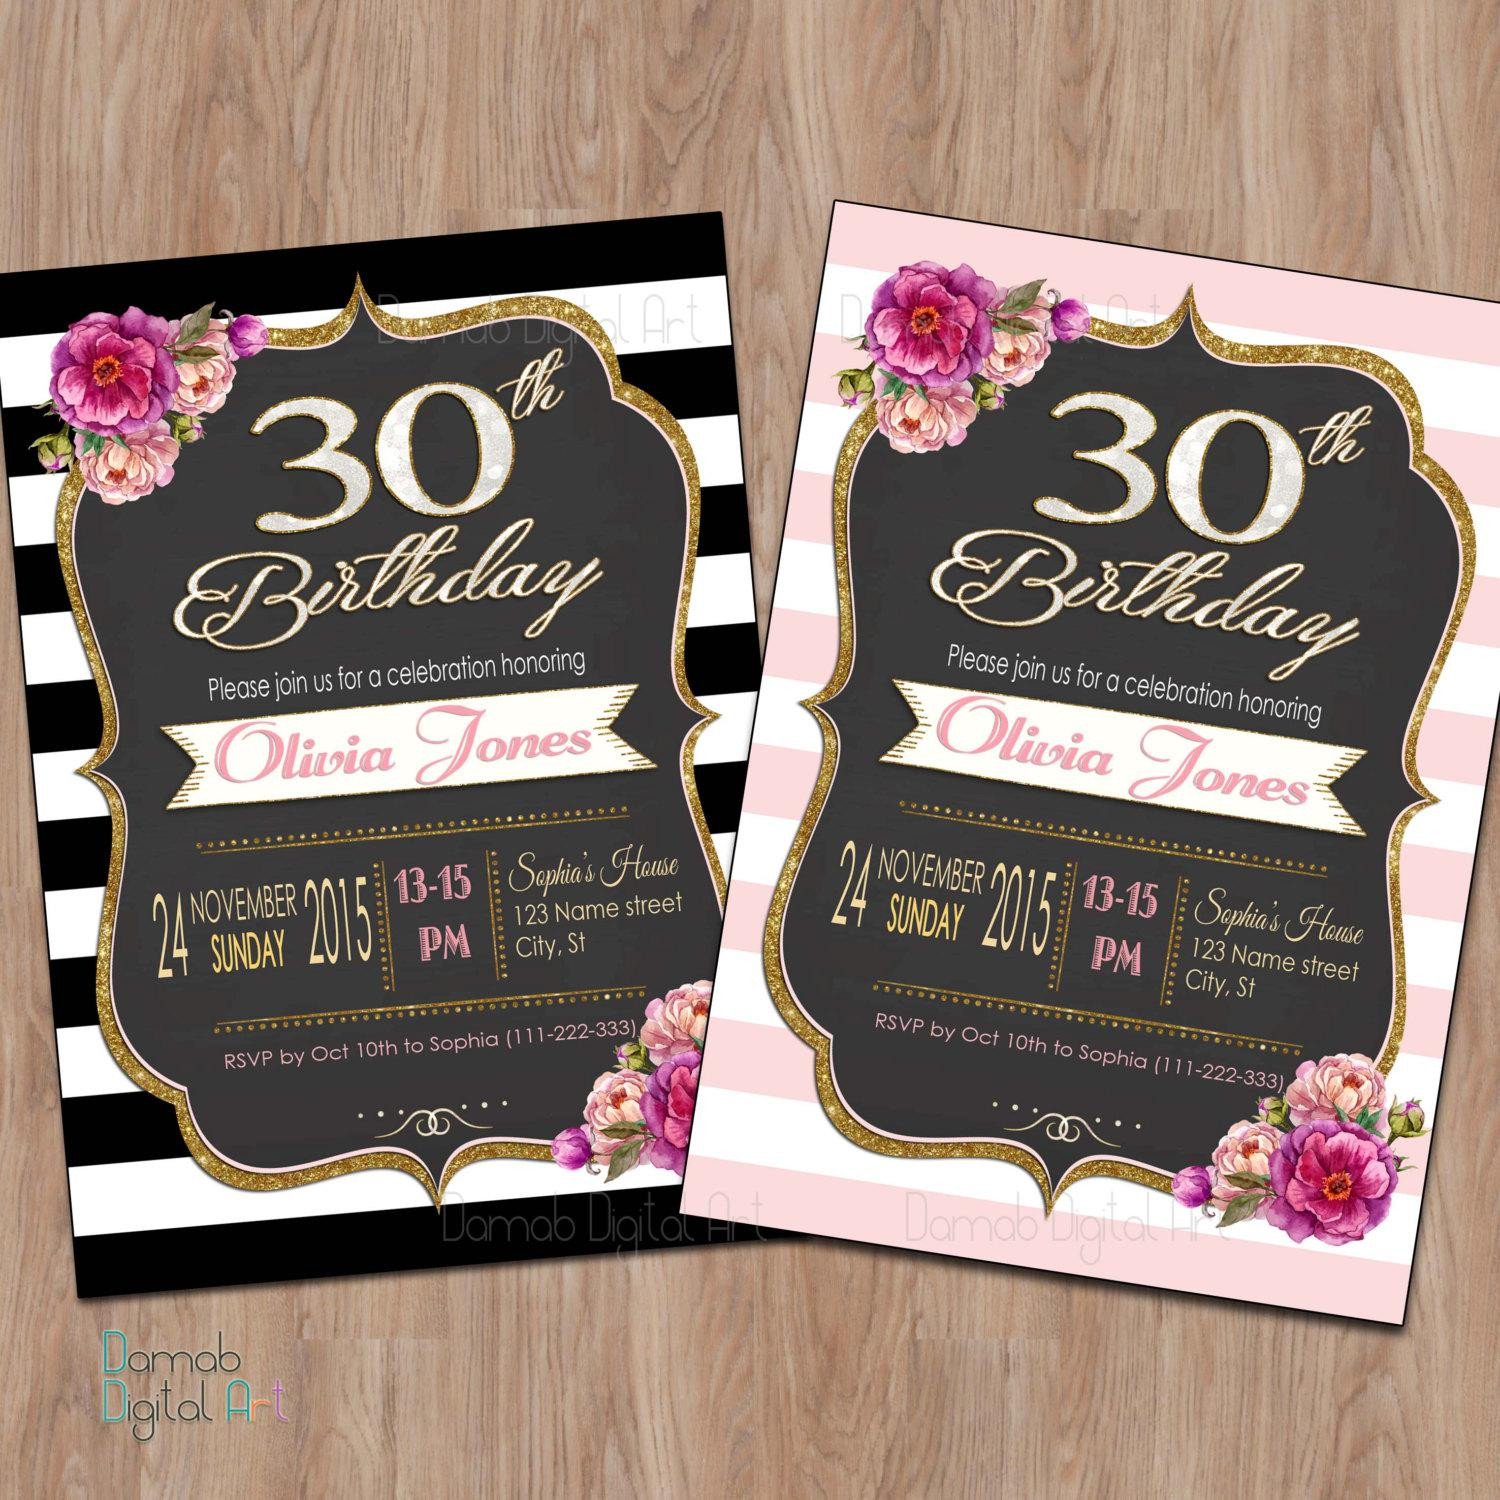 30Th Birthday Invitations Templates Free
 20 Interesting 30th Birthday Invitations Themes – Wording